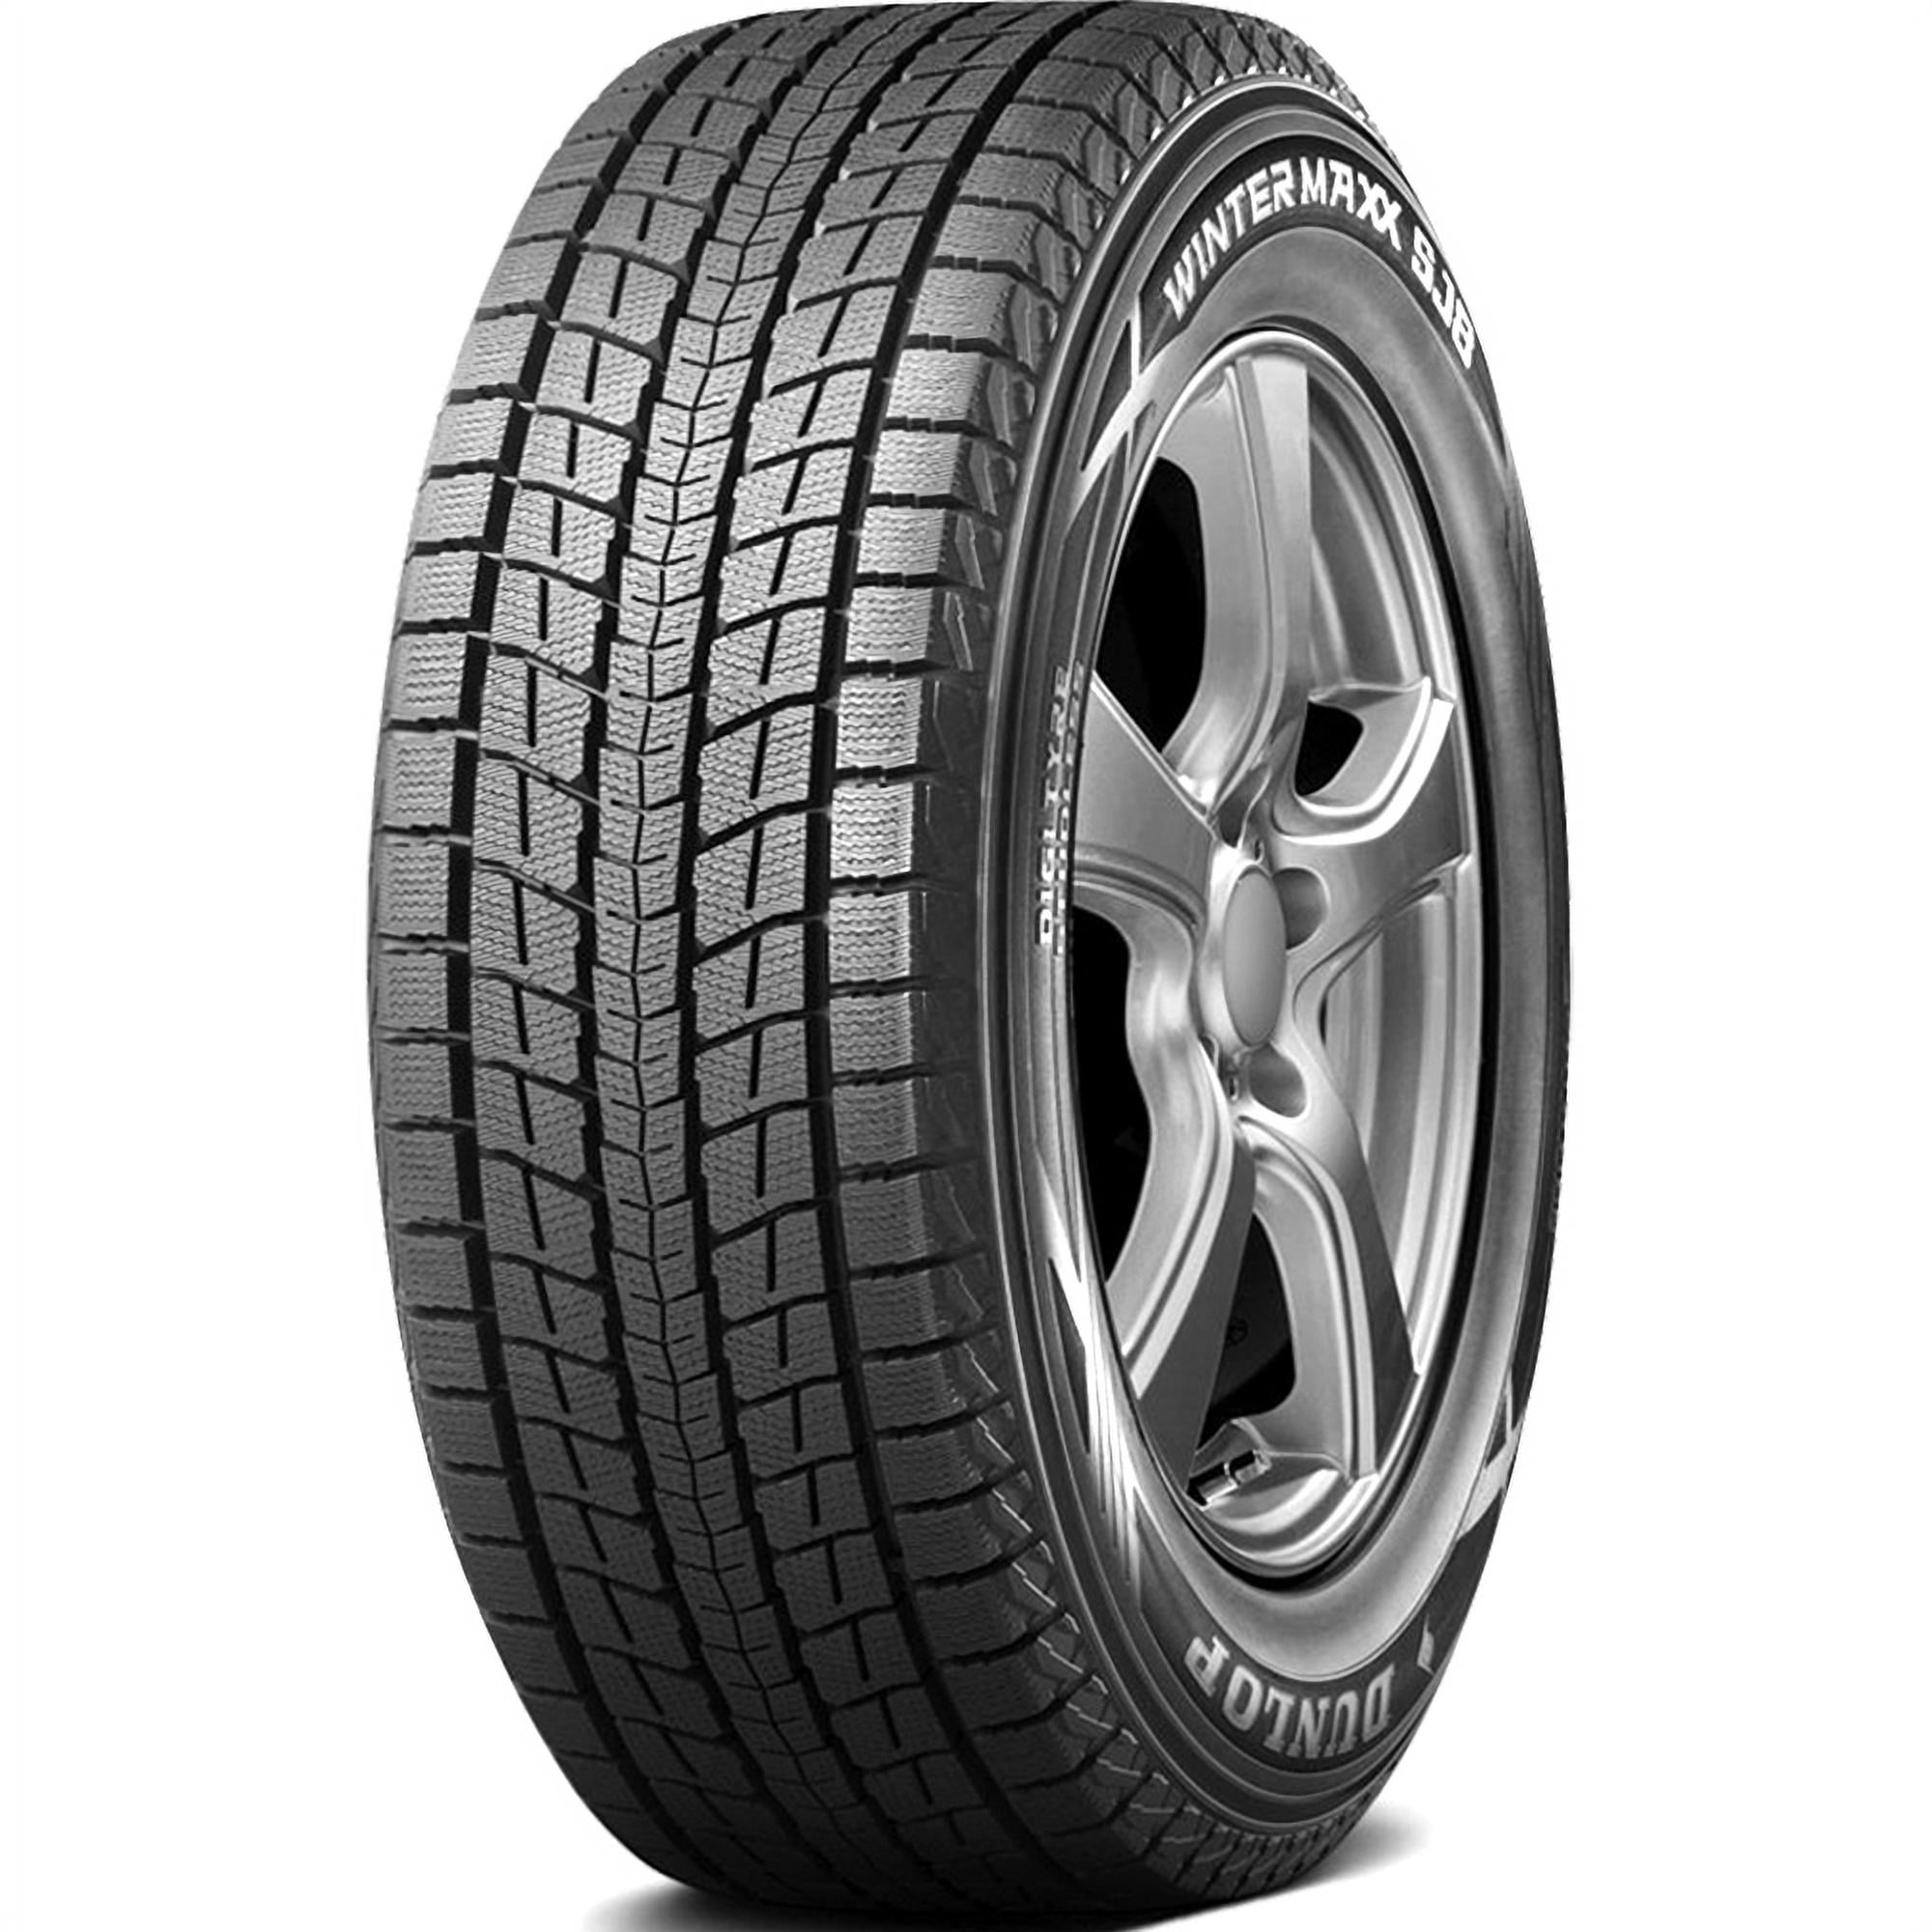 Dunlop Winter Maxx SJ8 235/65R17 108R XL (Studless) Snow Tire 